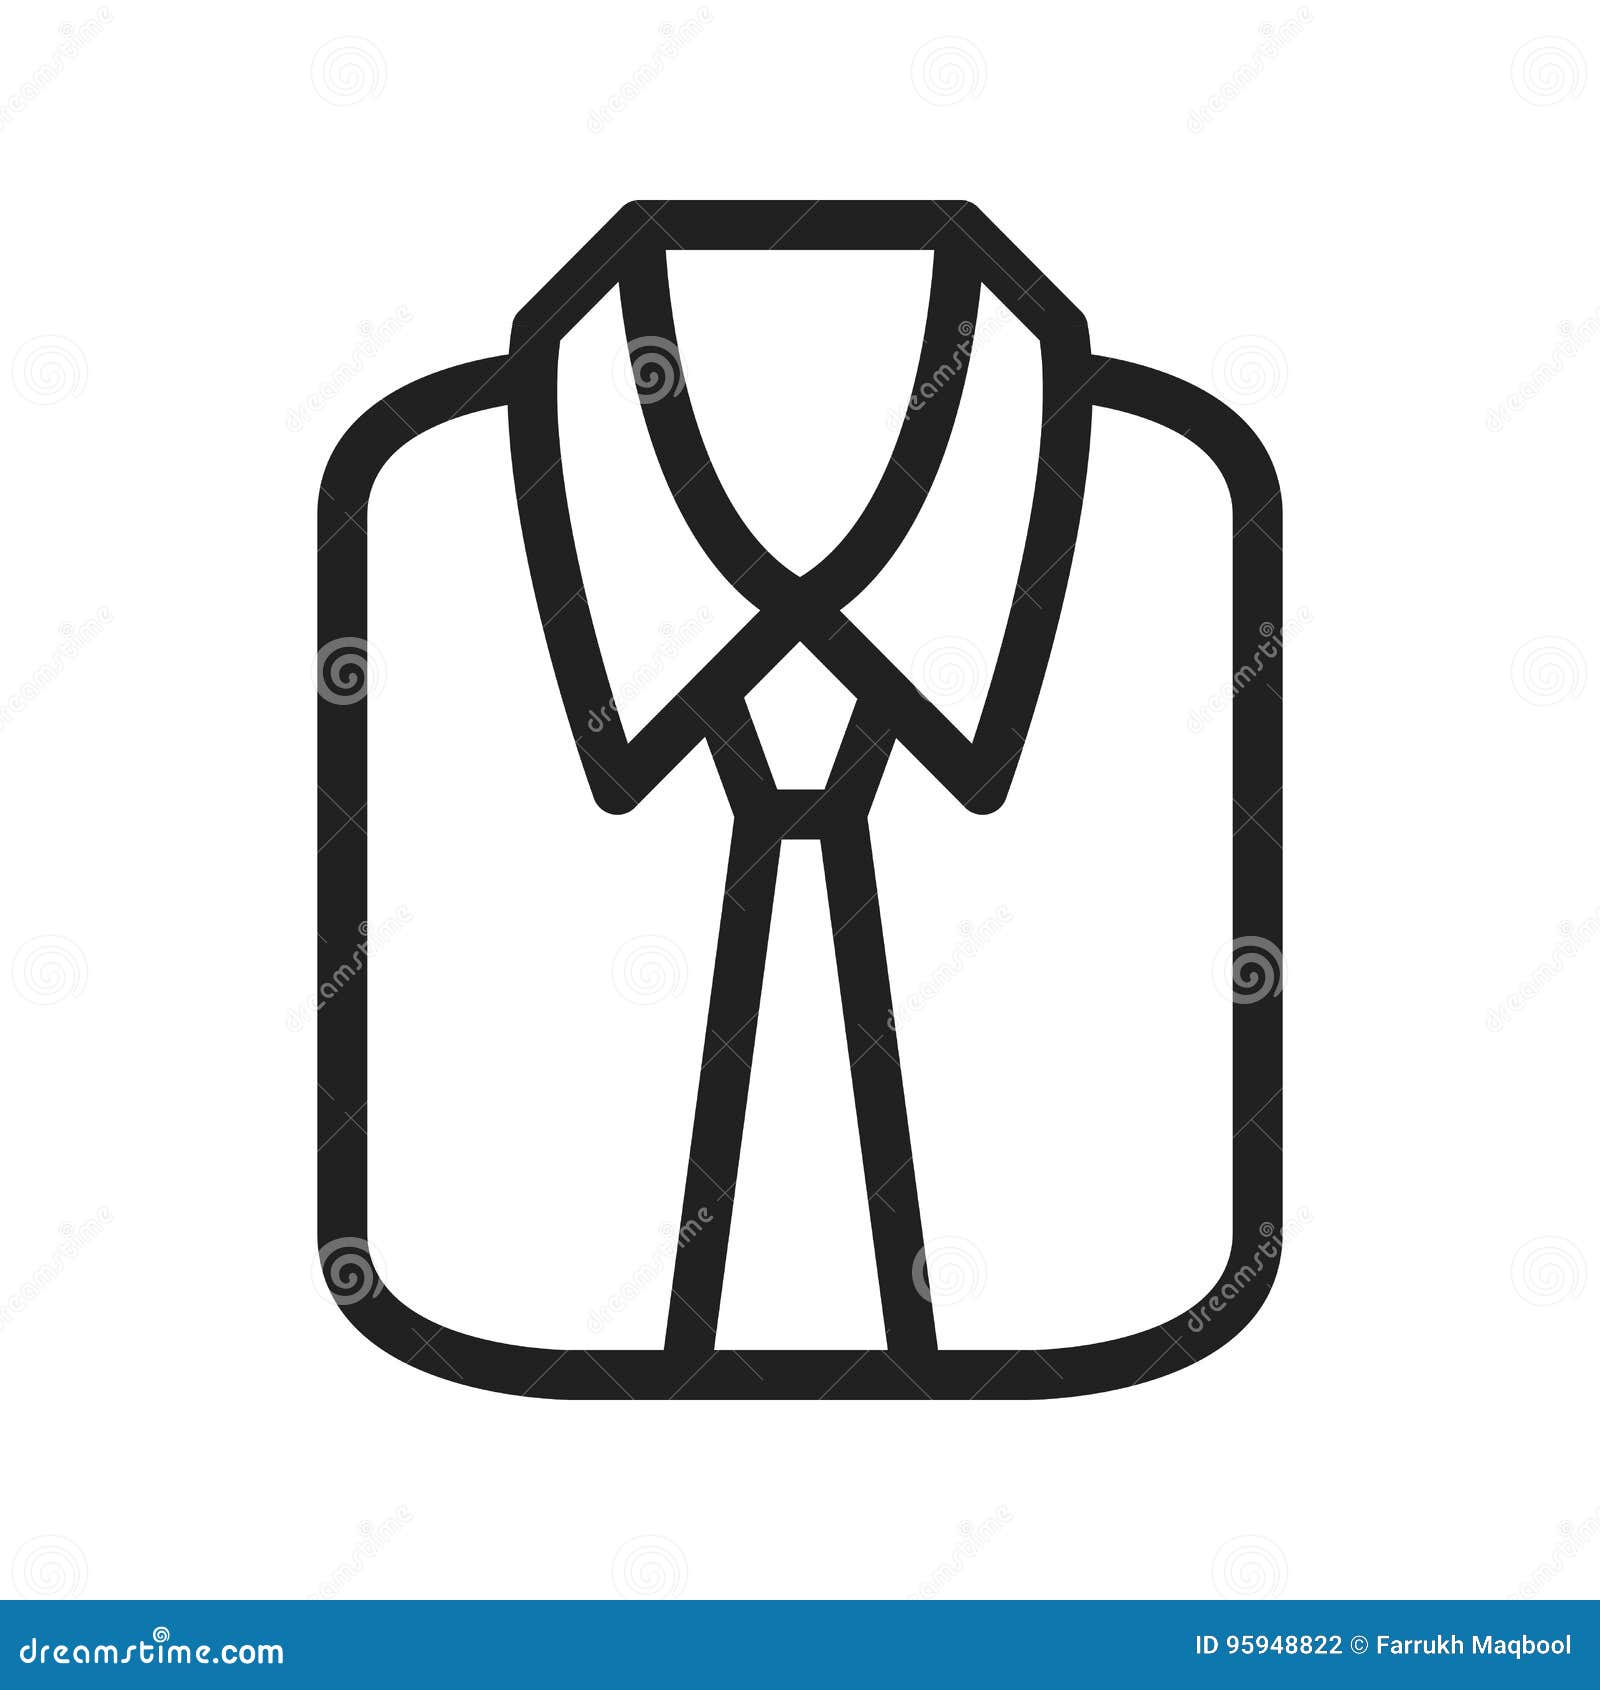  Formal  Shirt  stock vector  Illustration of cotton shirt  